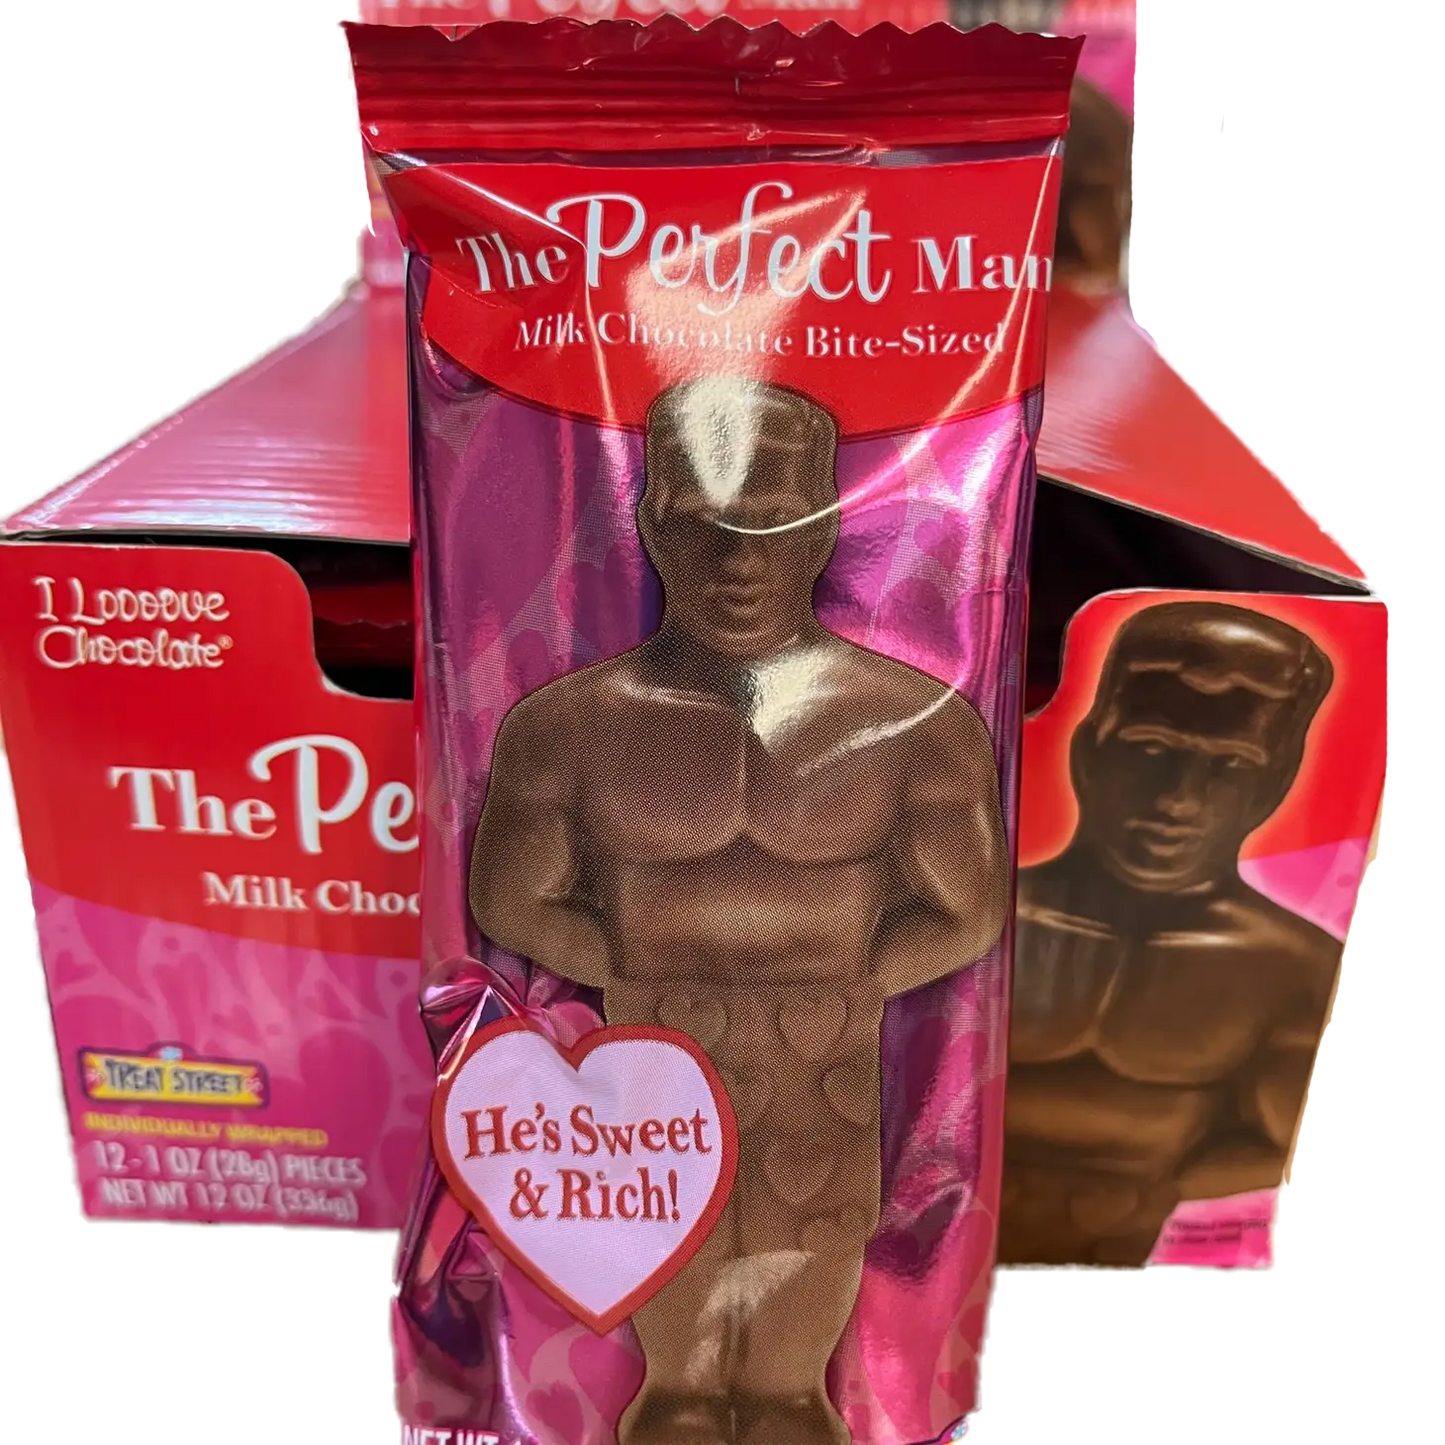 The Perfect Man Milk Chocolate Bite-Sized